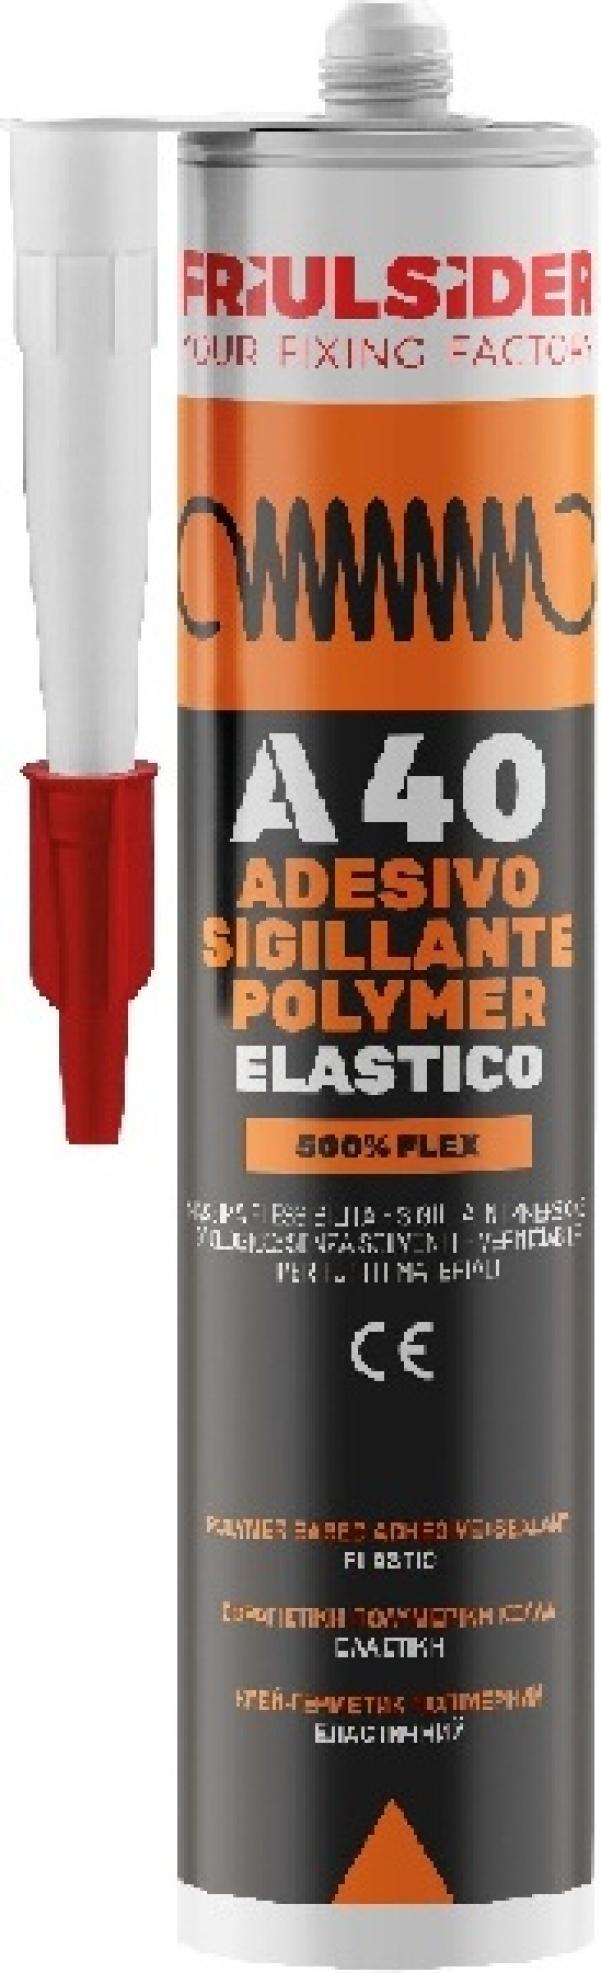 Adesivo Sigillante elastico polimeri bianco 290ml Friulsider A4011